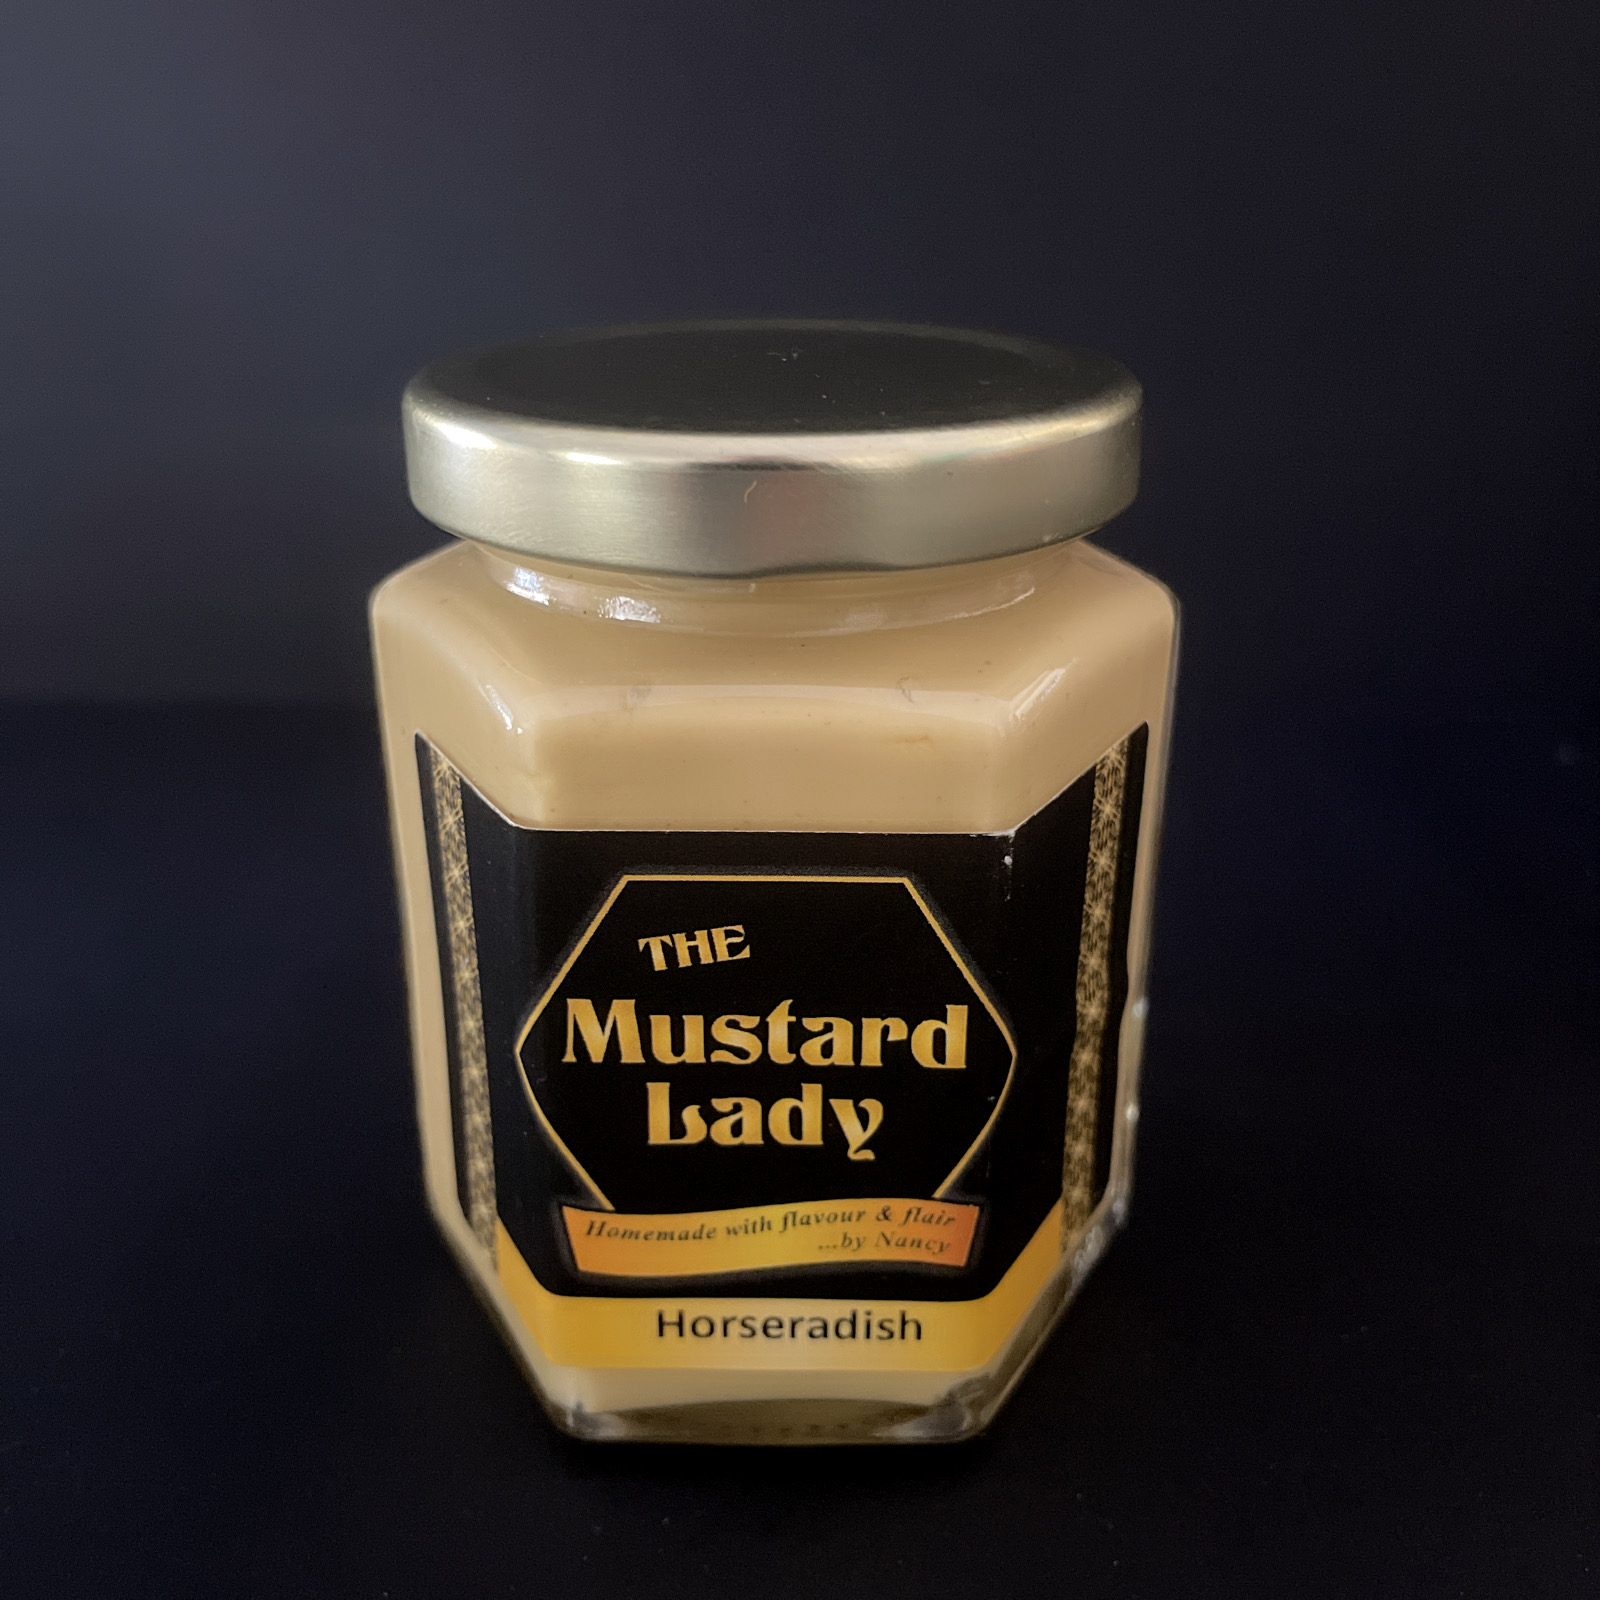 The Mustard Lady: Horseradish